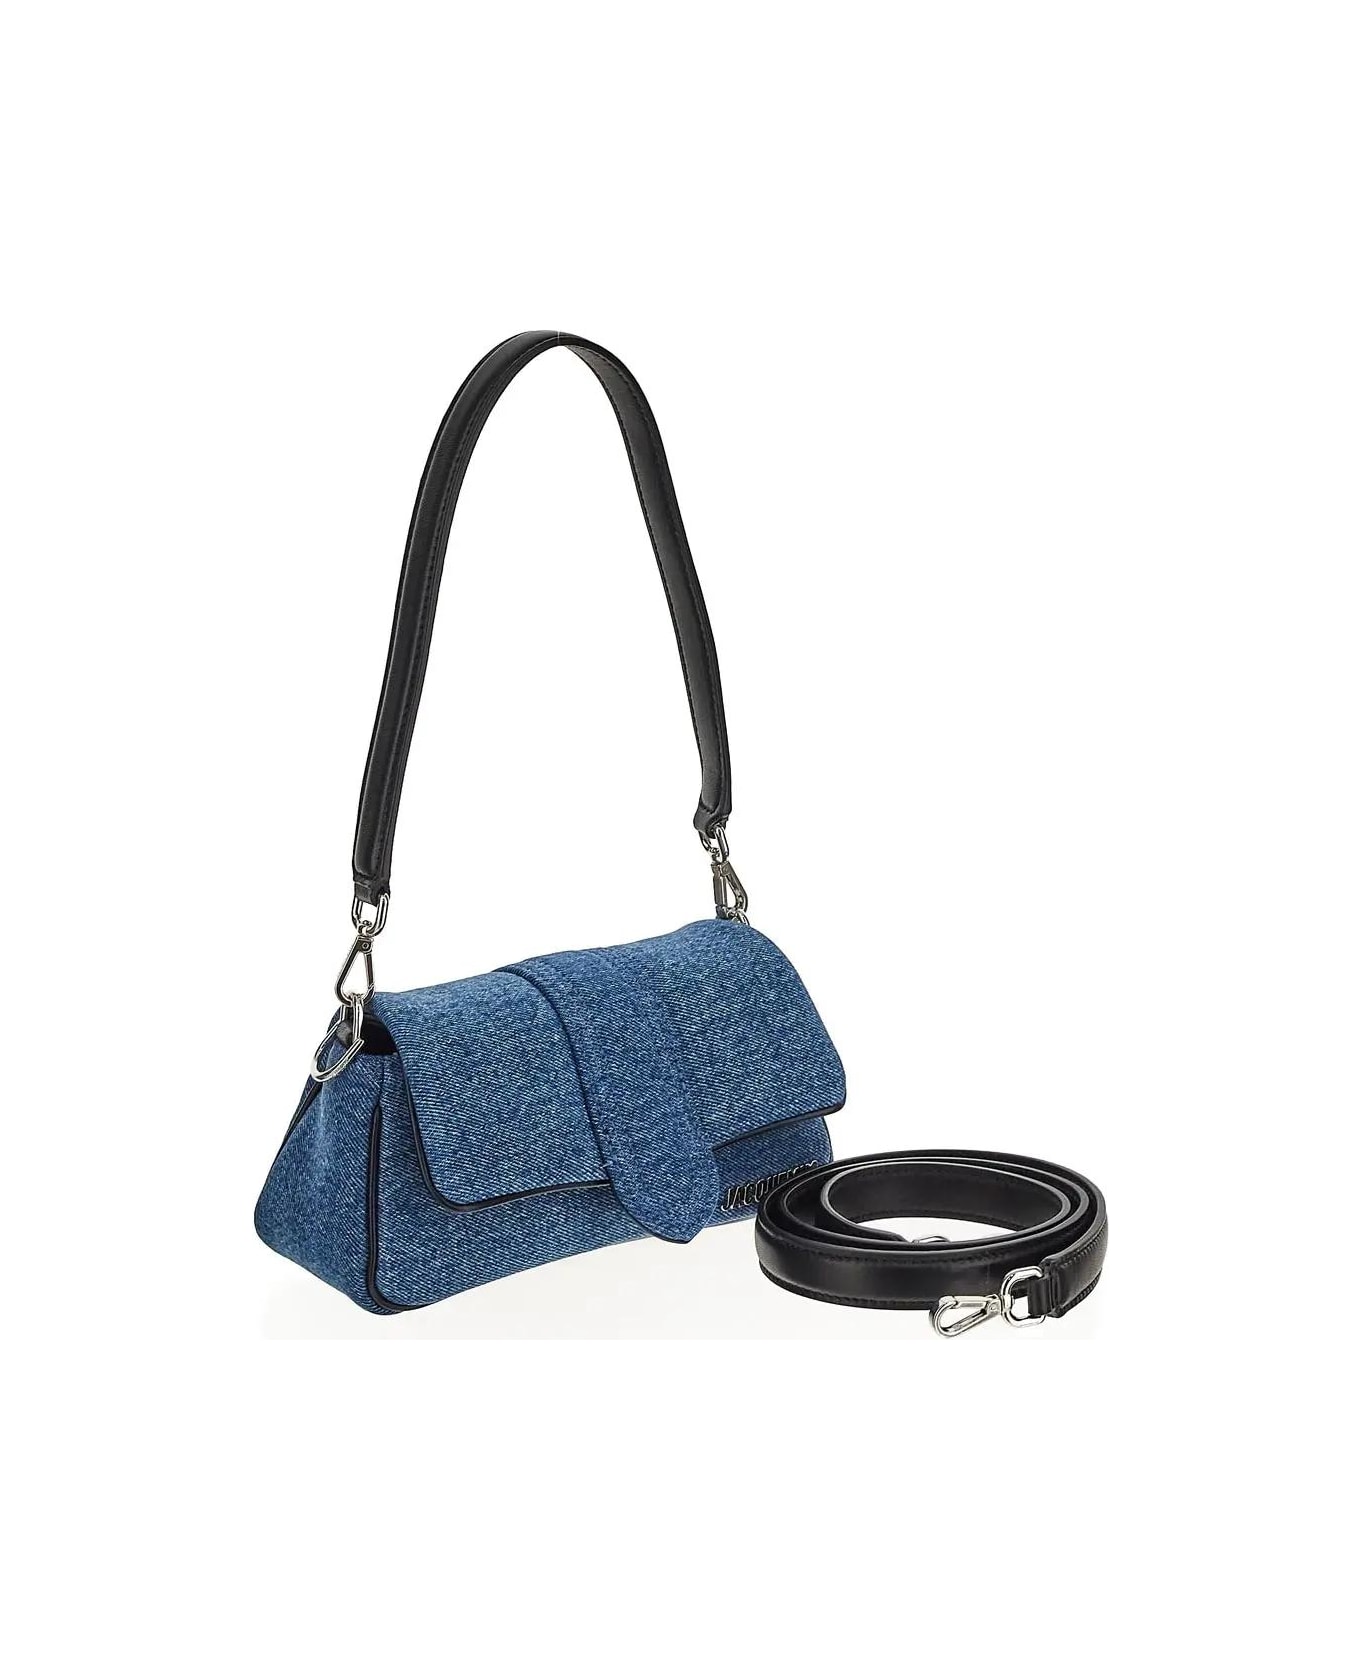 Jacquemus Le Petit Bambimou Handbag - Blu ショルダーバッグ